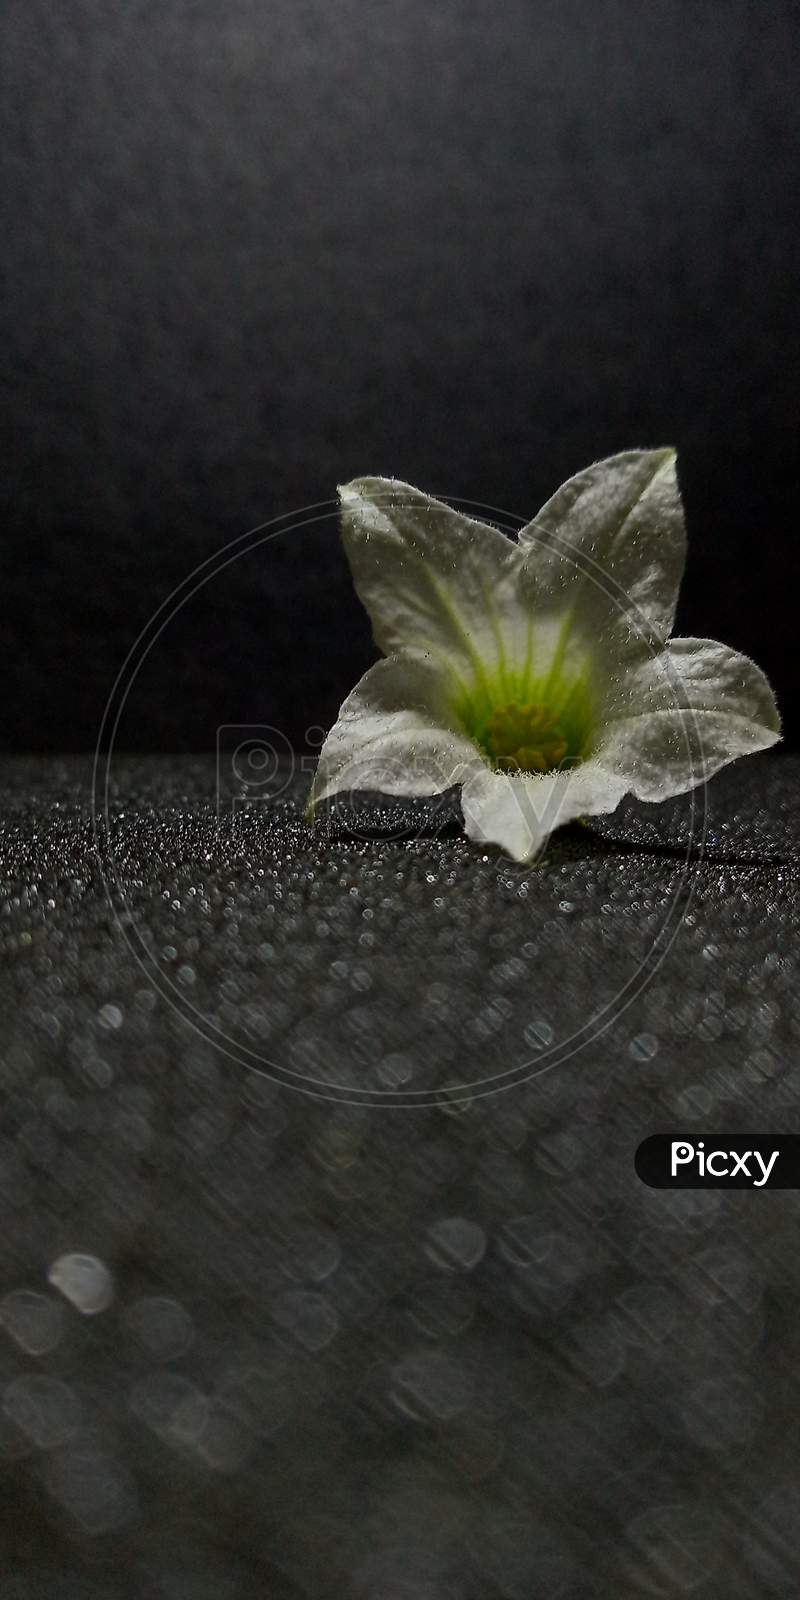 Ivy gourd flower